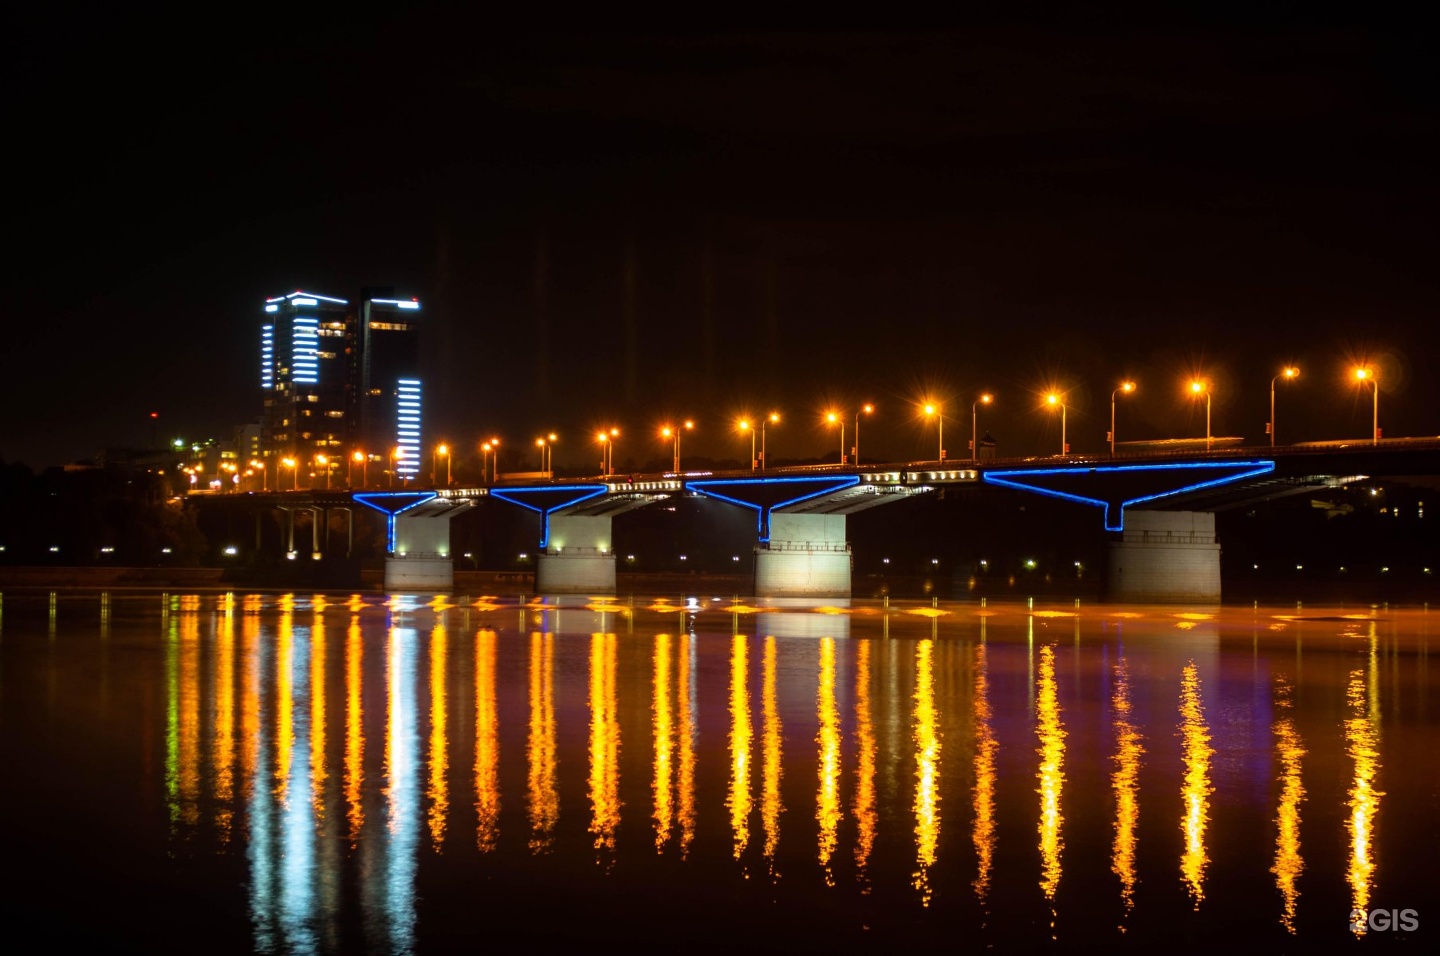 Камский мост Пермь